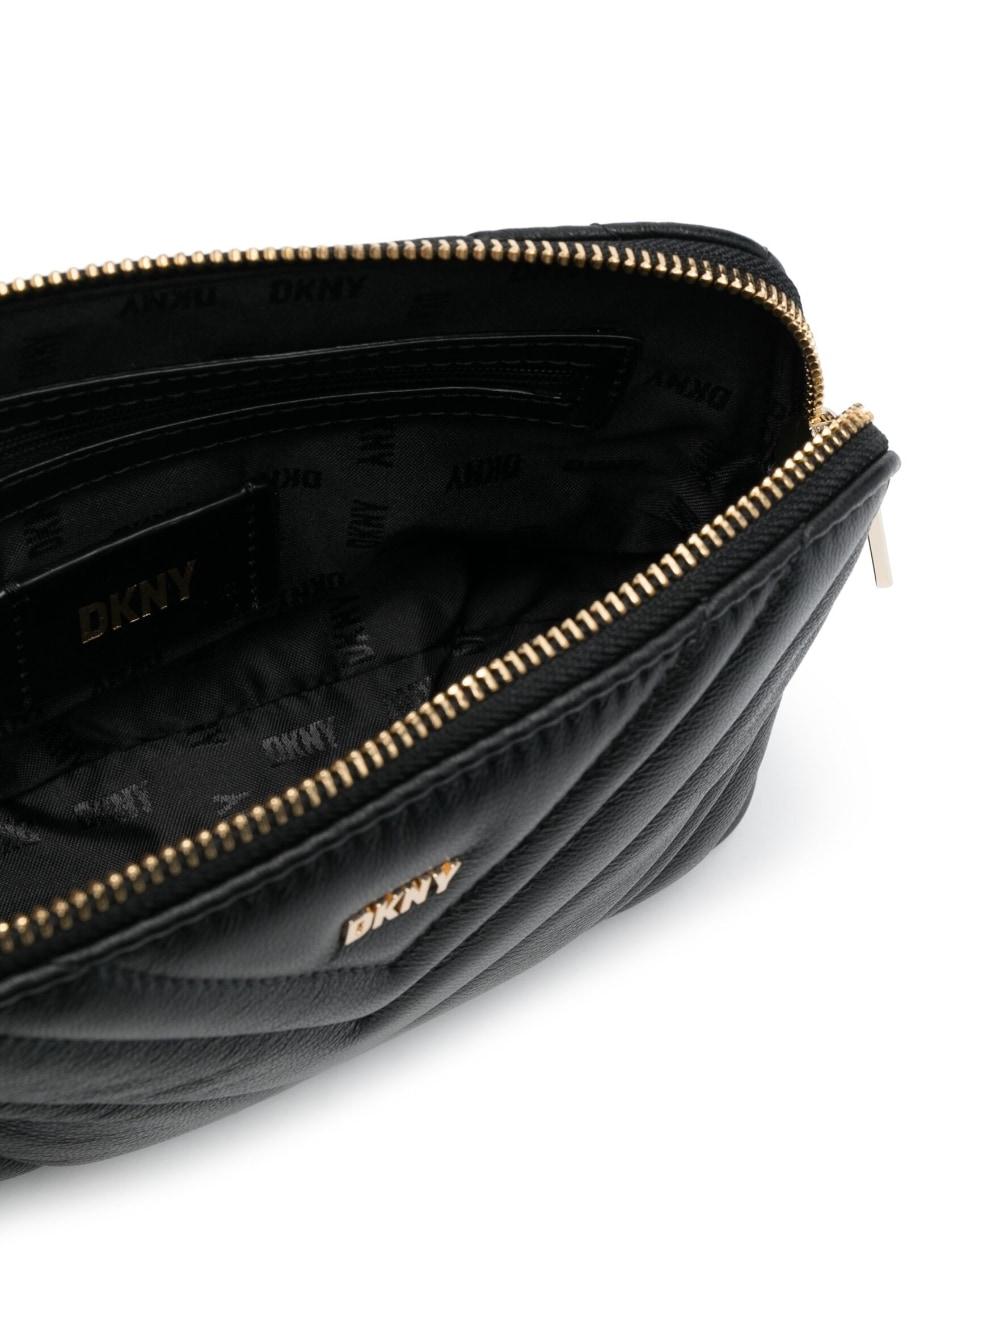 DKNY Sara Camera Crossbody Bag in Black | Lyst